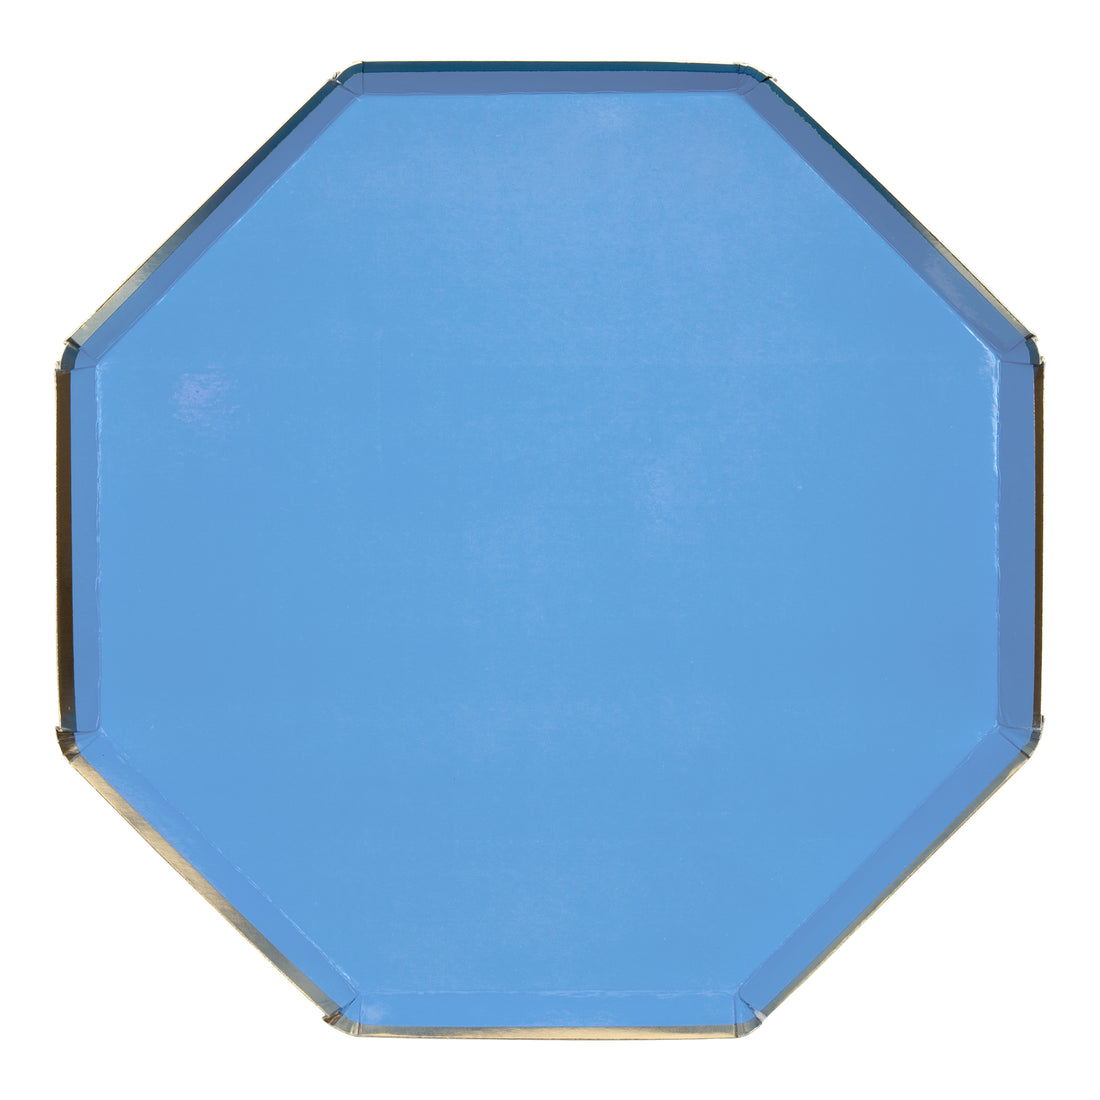 large blue octagonal plate